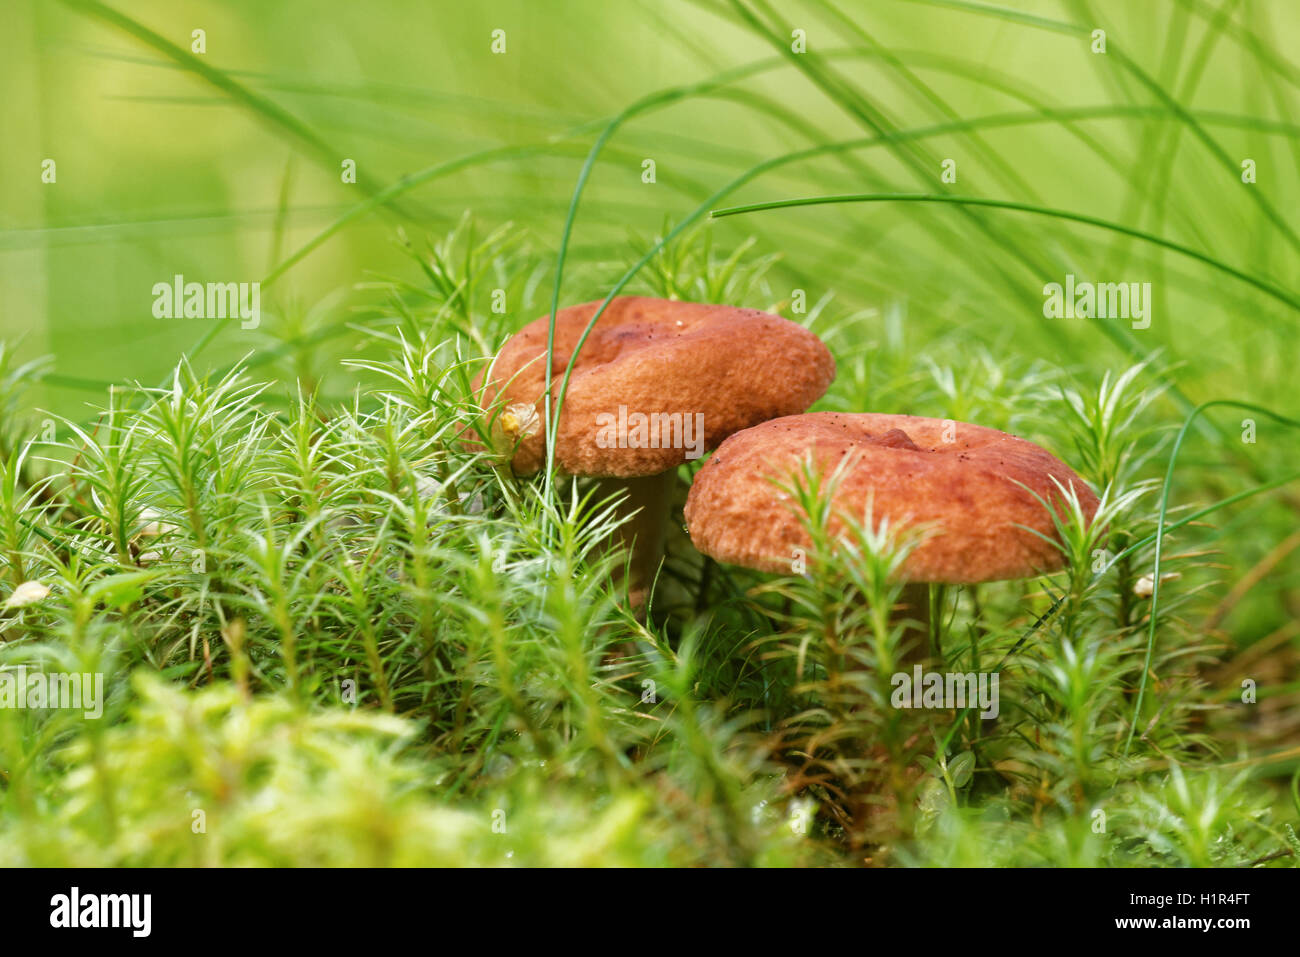 Two milk mushrooms in green moss. Stock Photo